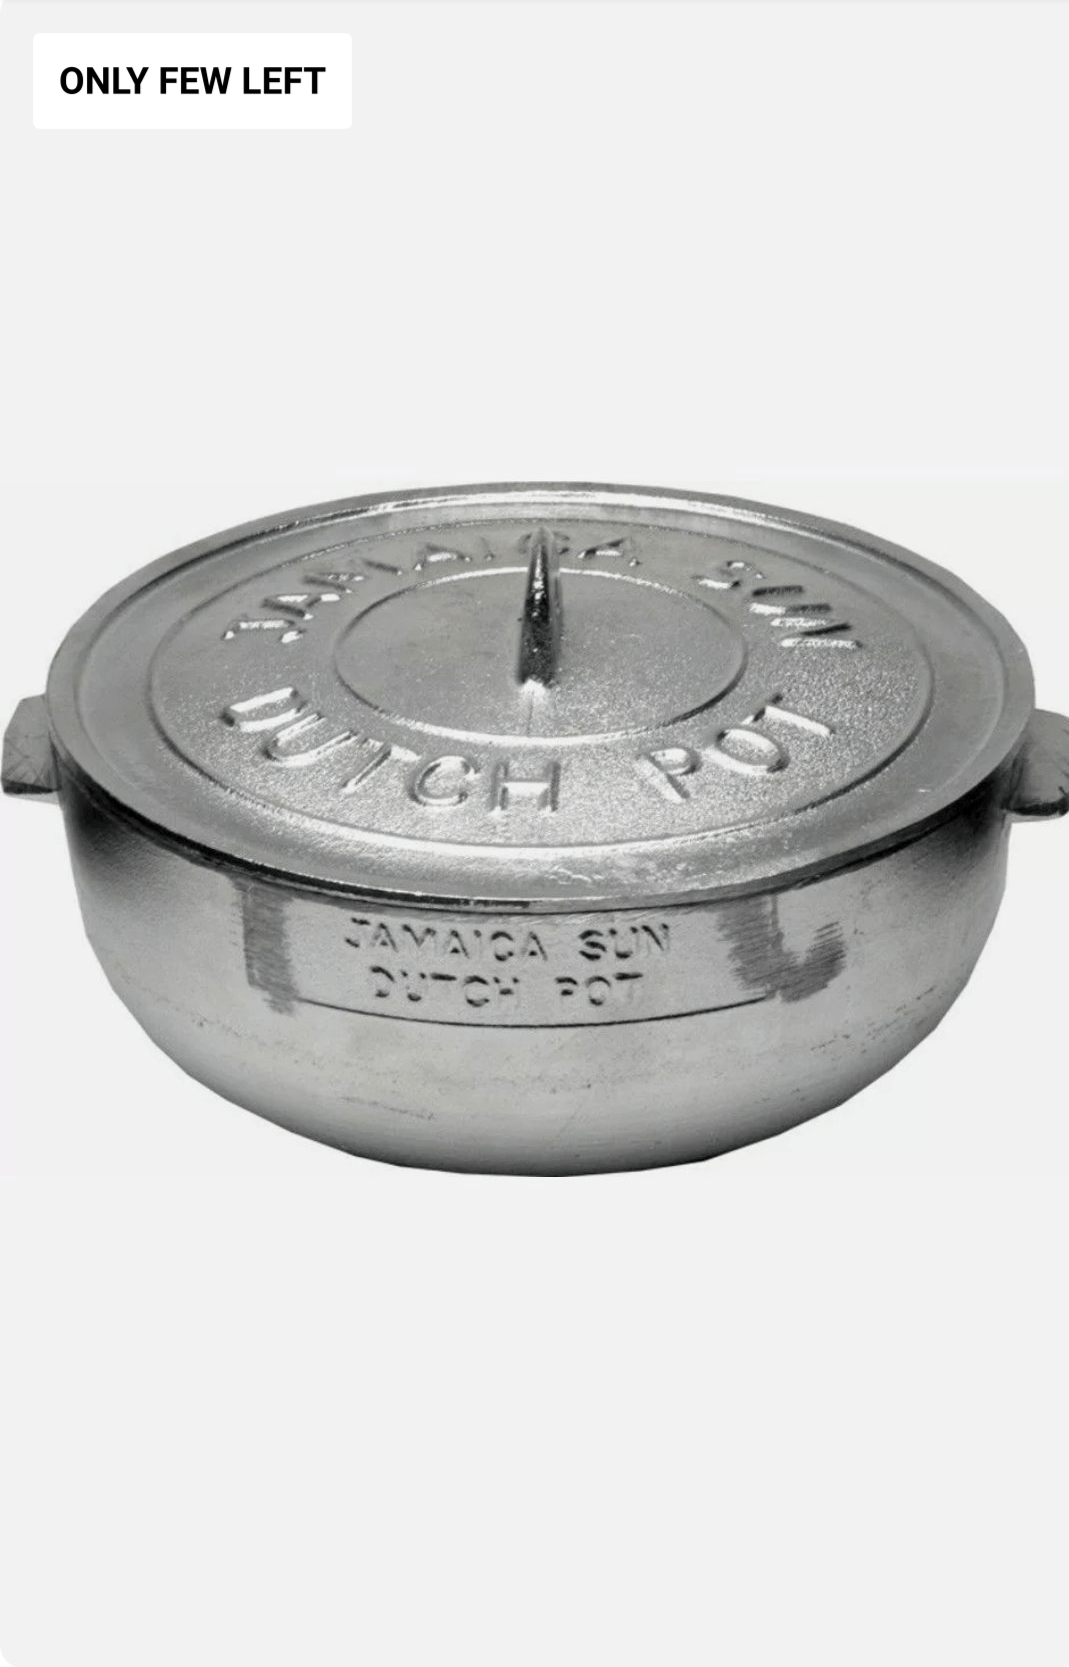  New Jamaican Caribbean Dutch Pots Casserole Oven Heavy Duty  Dutchie - Diameter: 22 cm : לבית ולמטבח